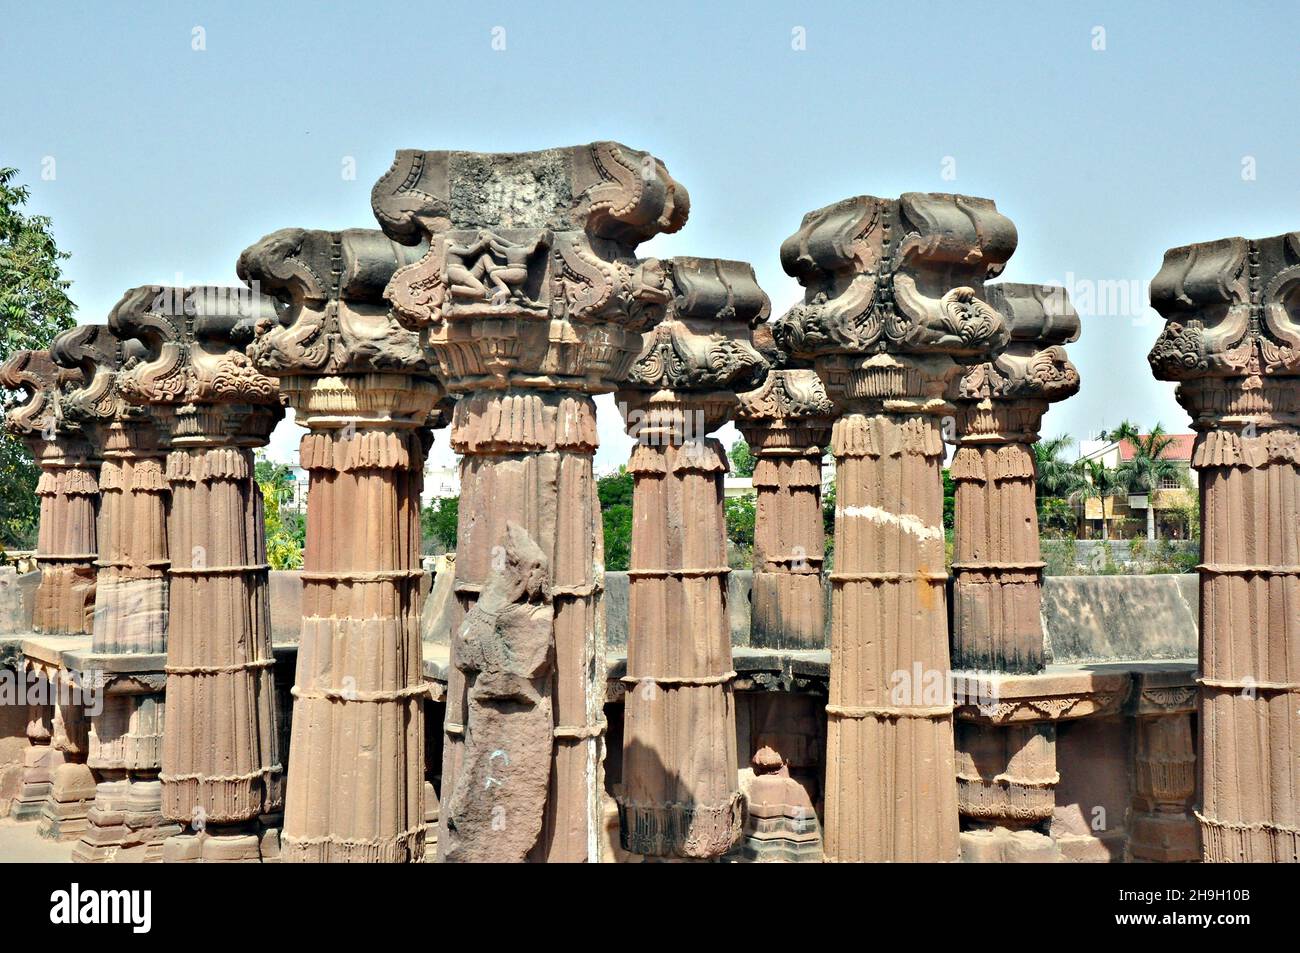 Antica architettura indiana. Antica archeologia antica di asia india. Foto Stock